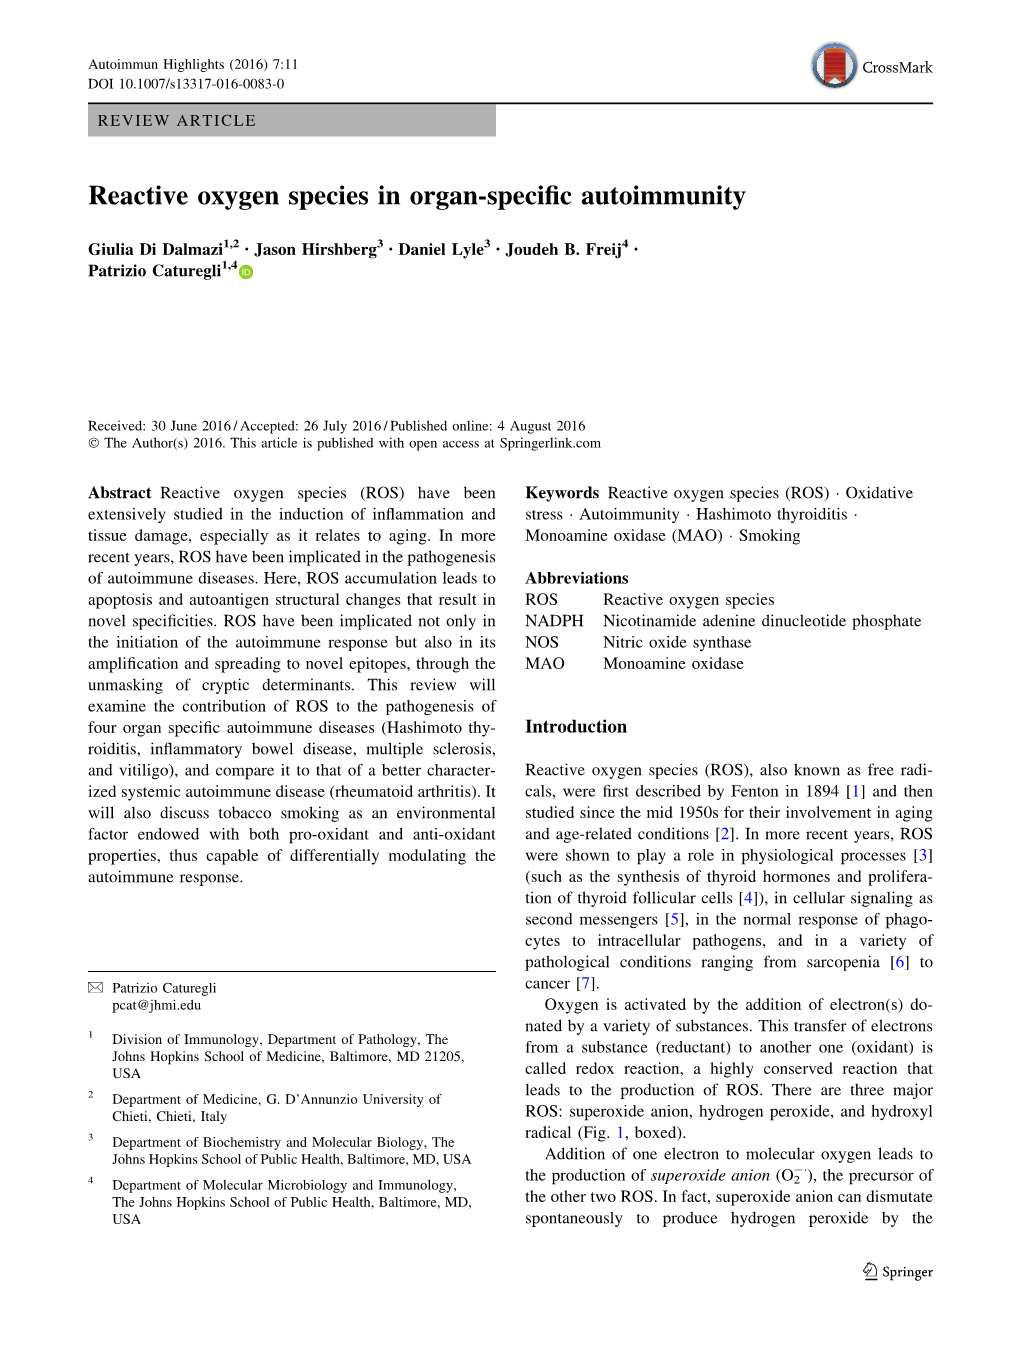 Reactive Oxygen Species in Organ-Specific Autoimmunity